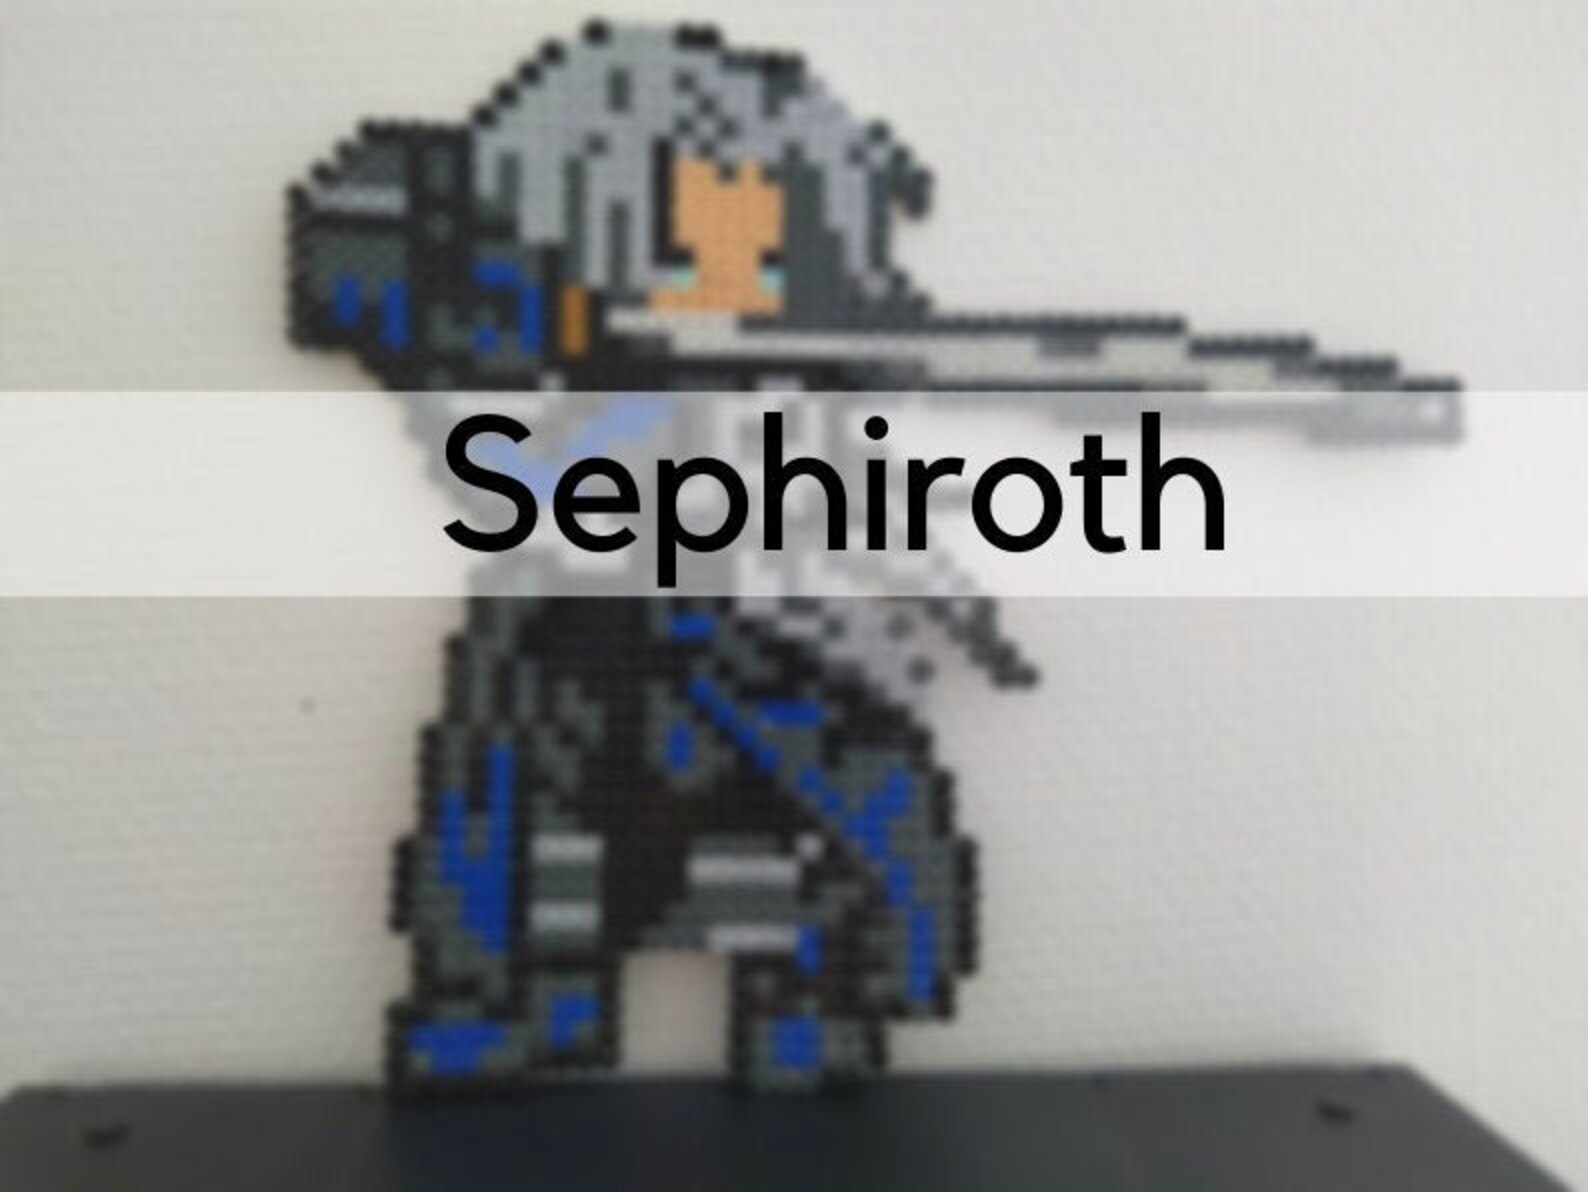 Sephiroth Sprite Sheet